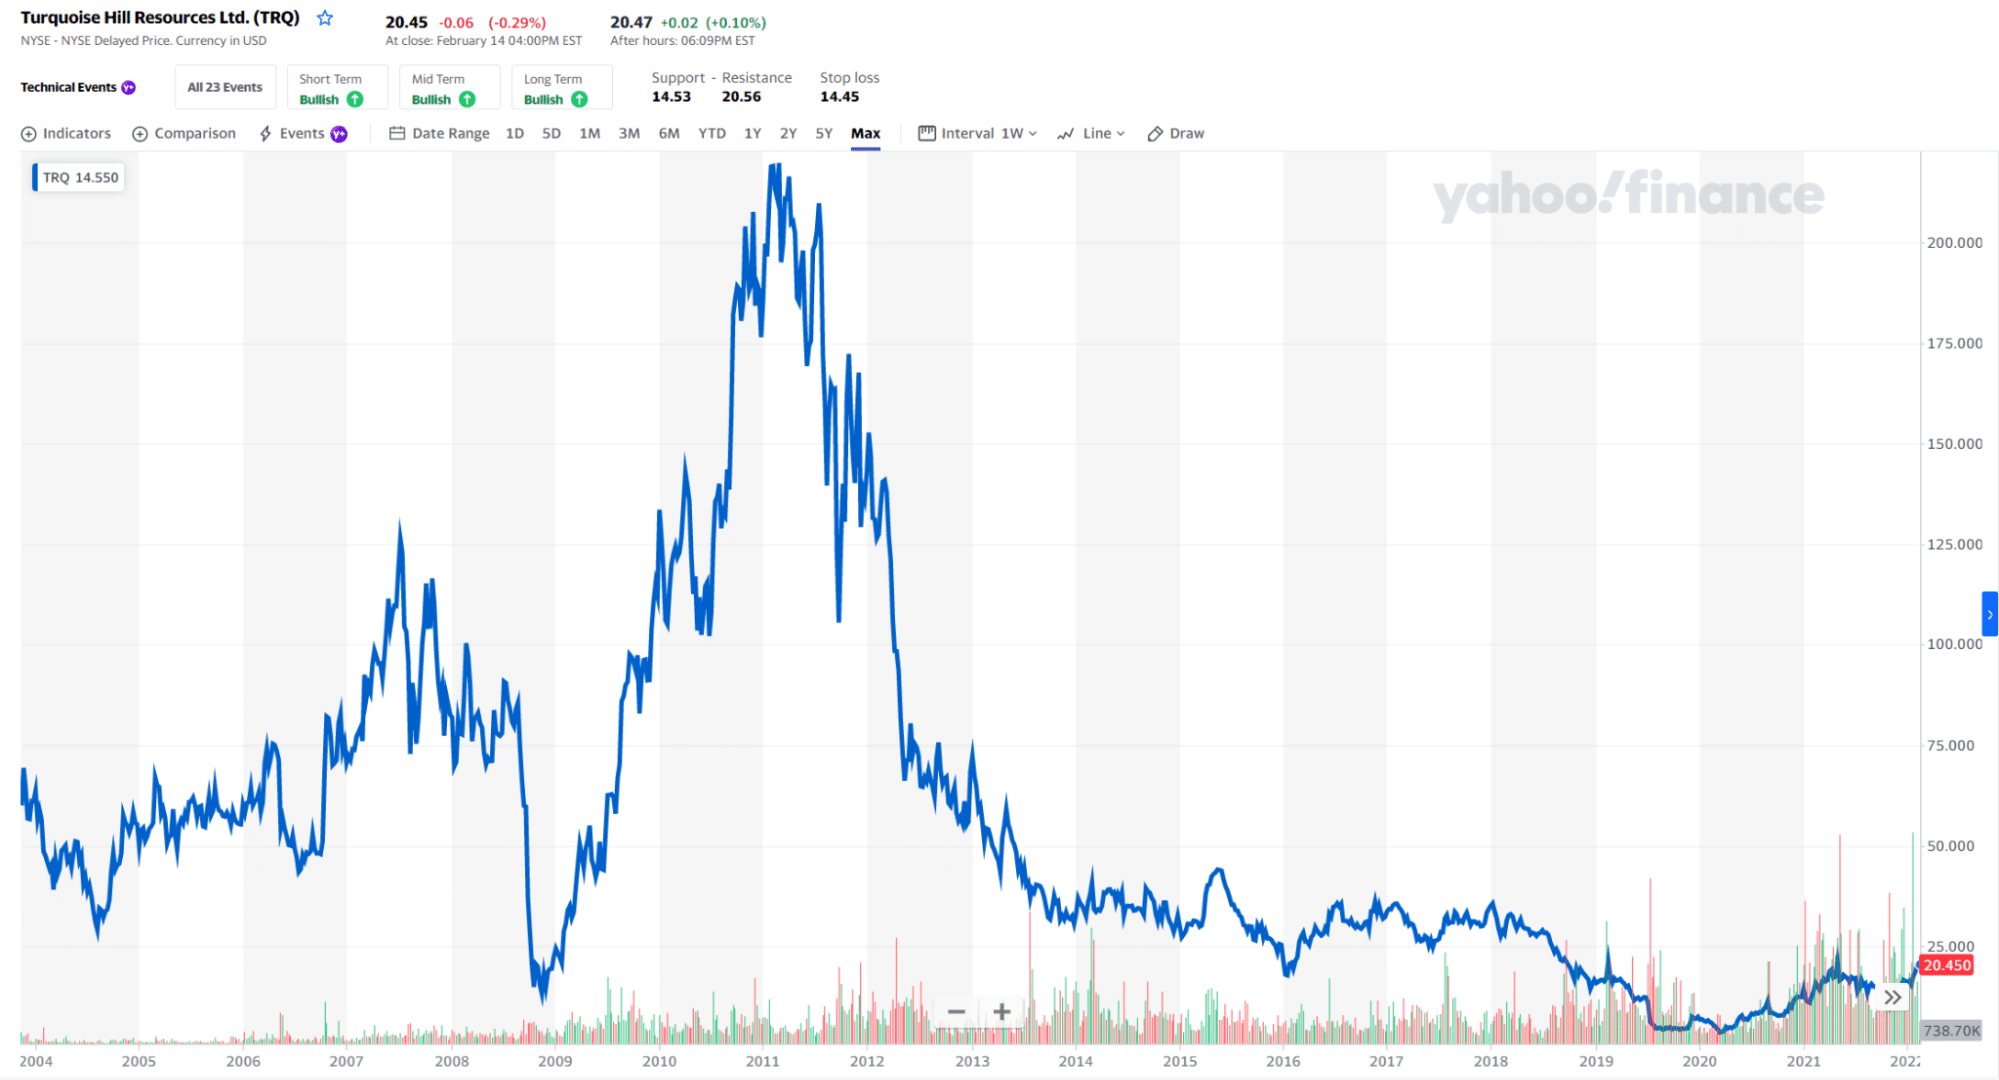 TRQ stock price chart 2004-2022